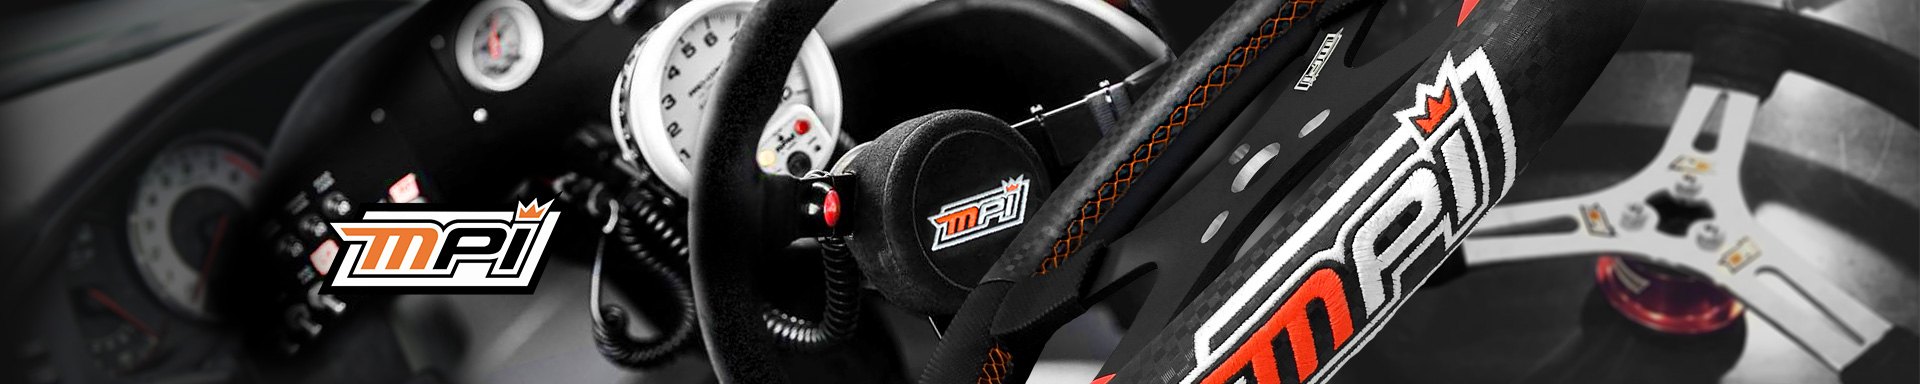 MPI Steering Wheels